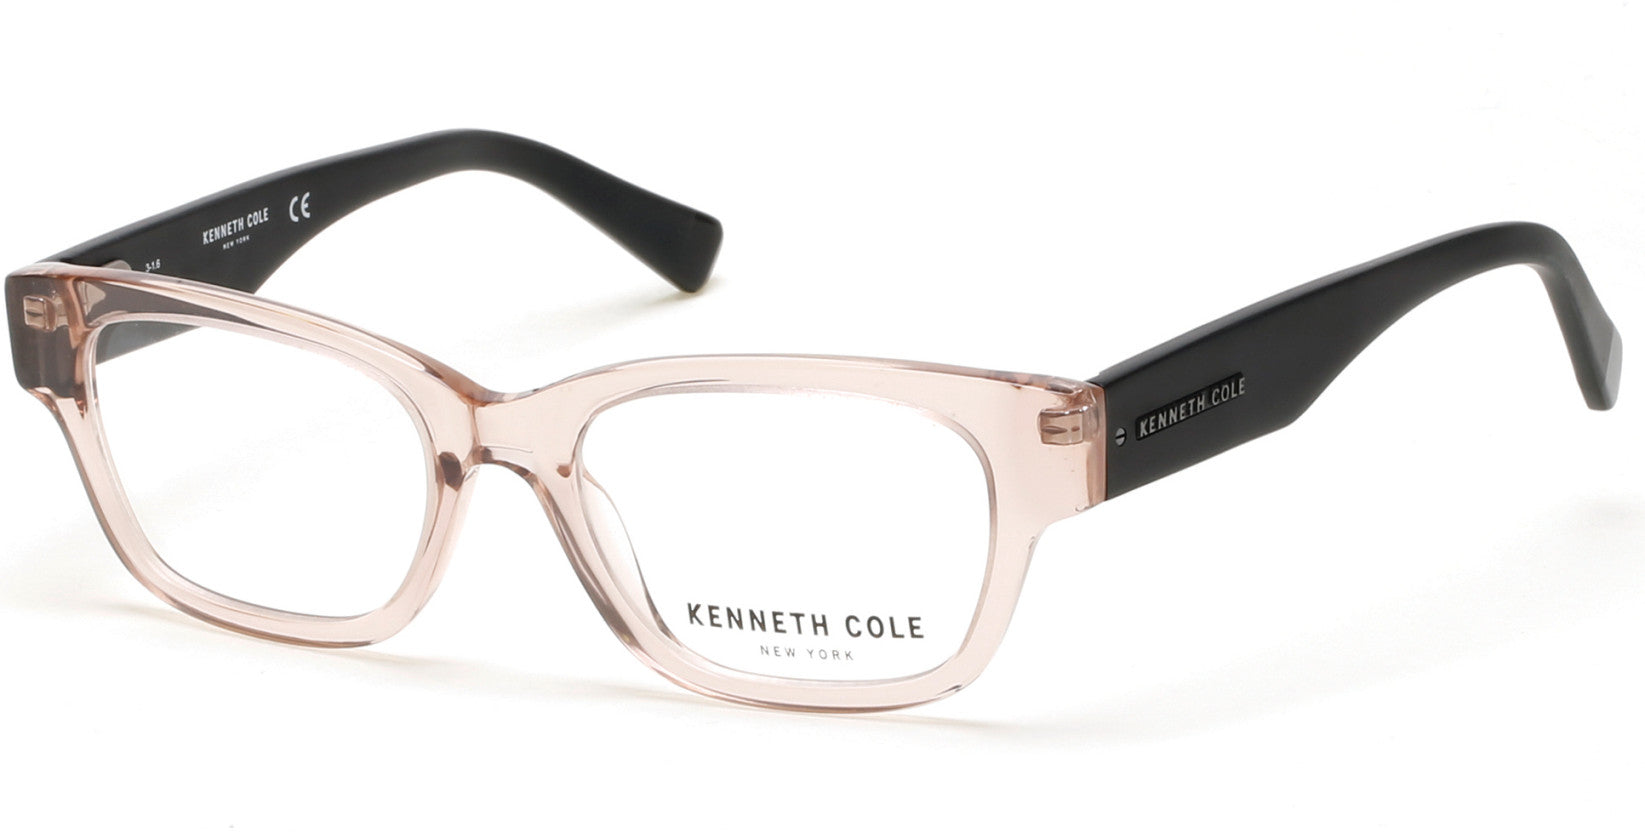 Kenneth Cole New York,Kenneth Cole Reaction KC0254 Geometric Eyeglasses 072-072 - Shiny Pink